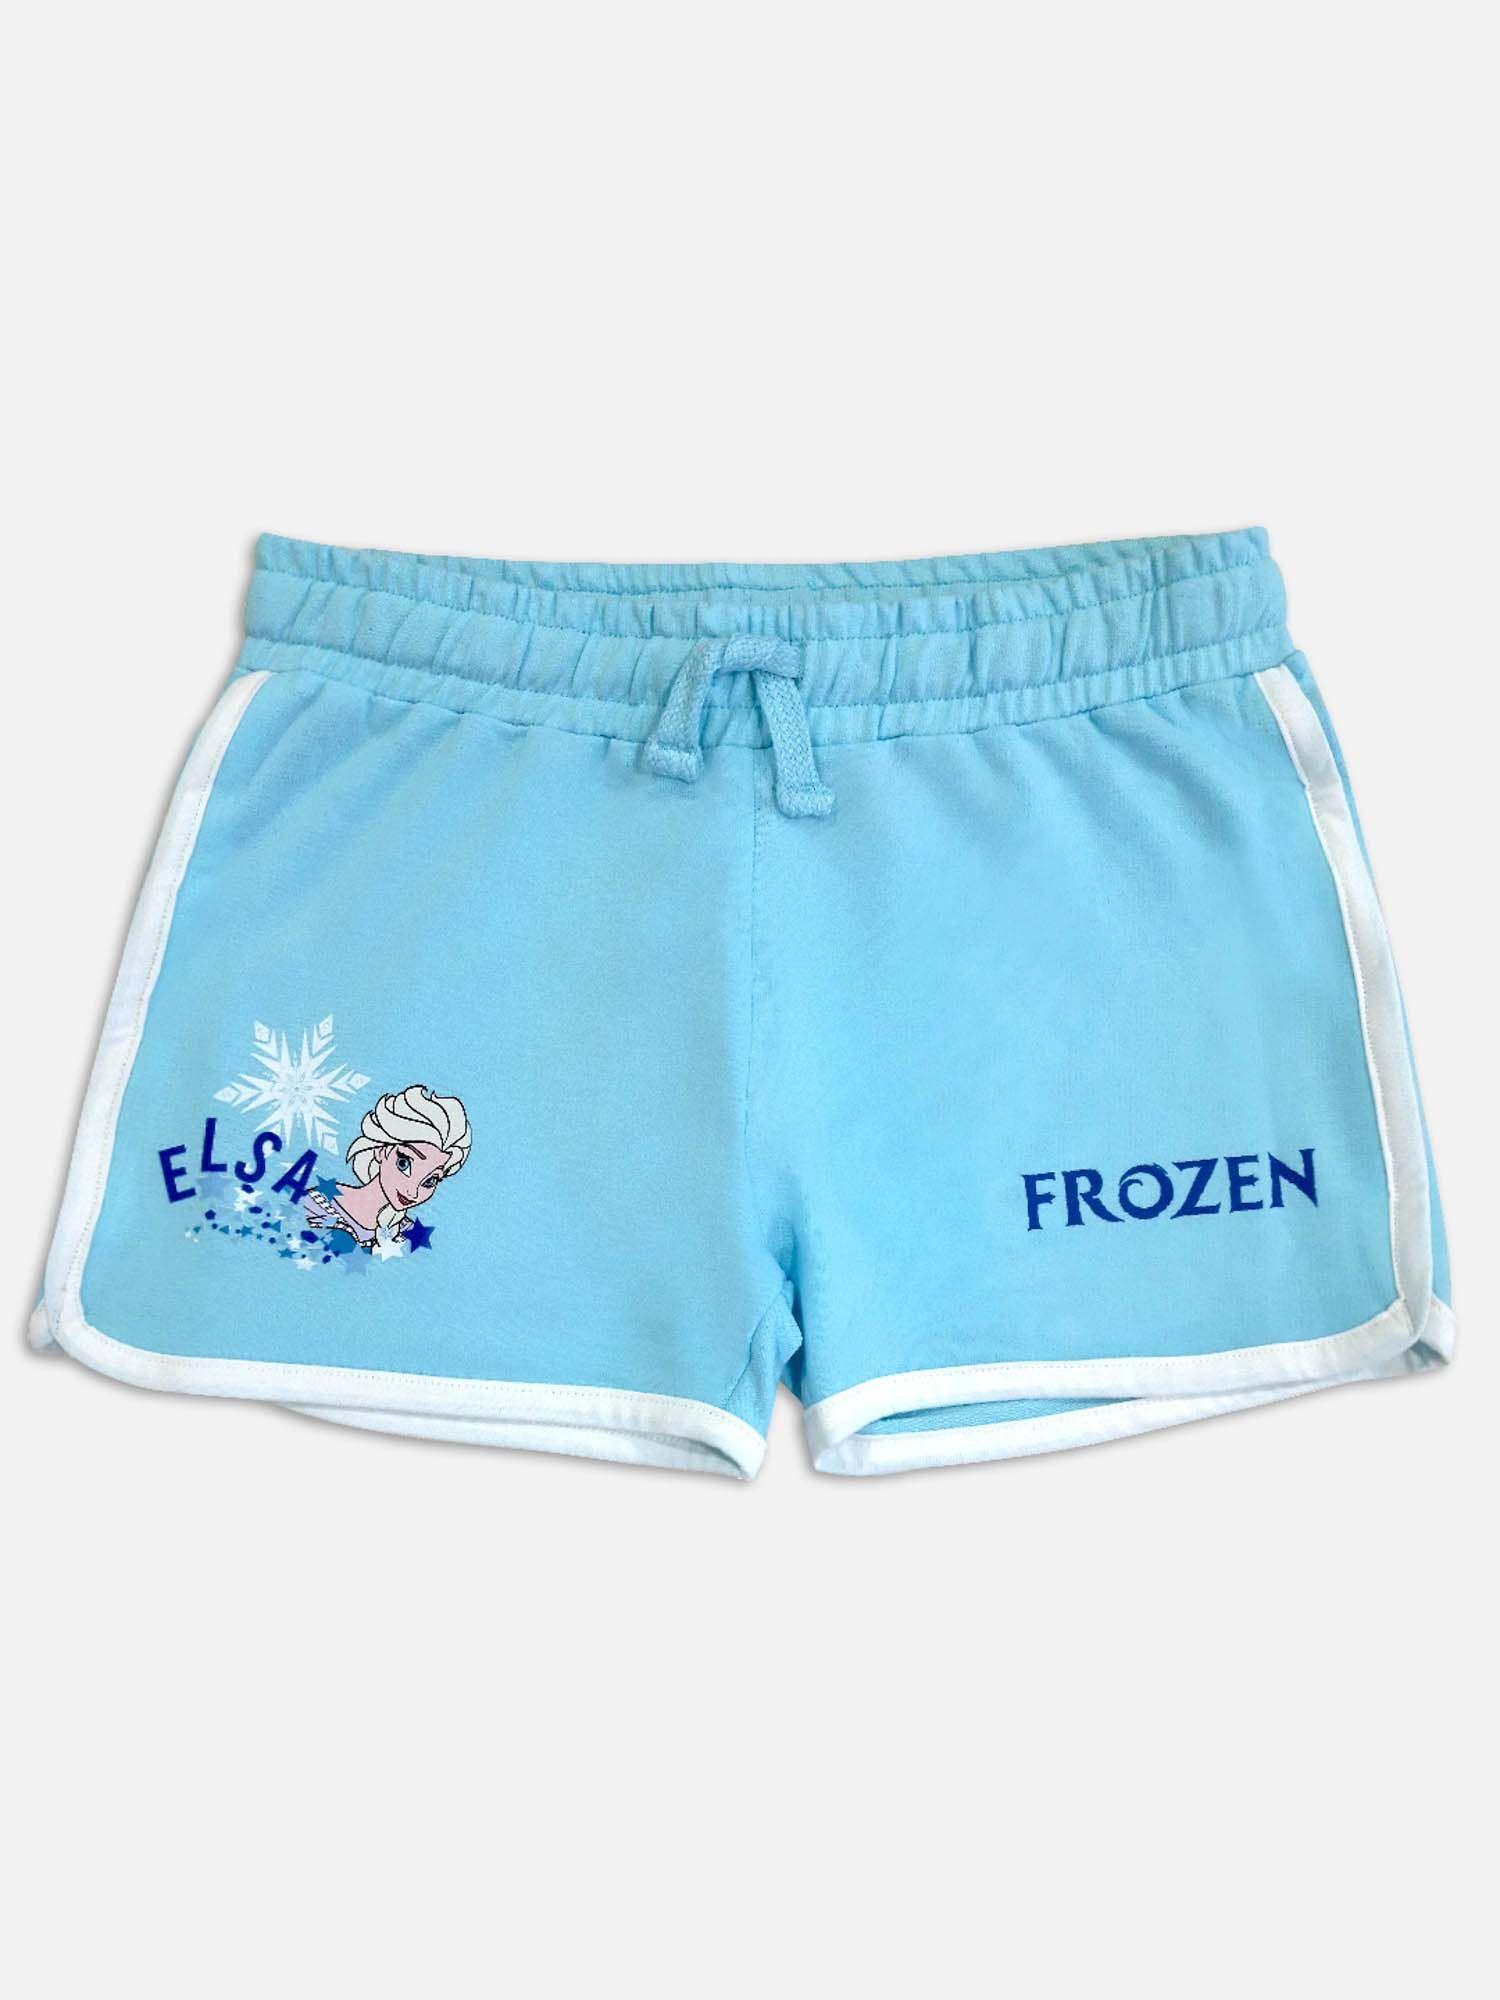 Frozen Featured Shorts for Girls - Blue